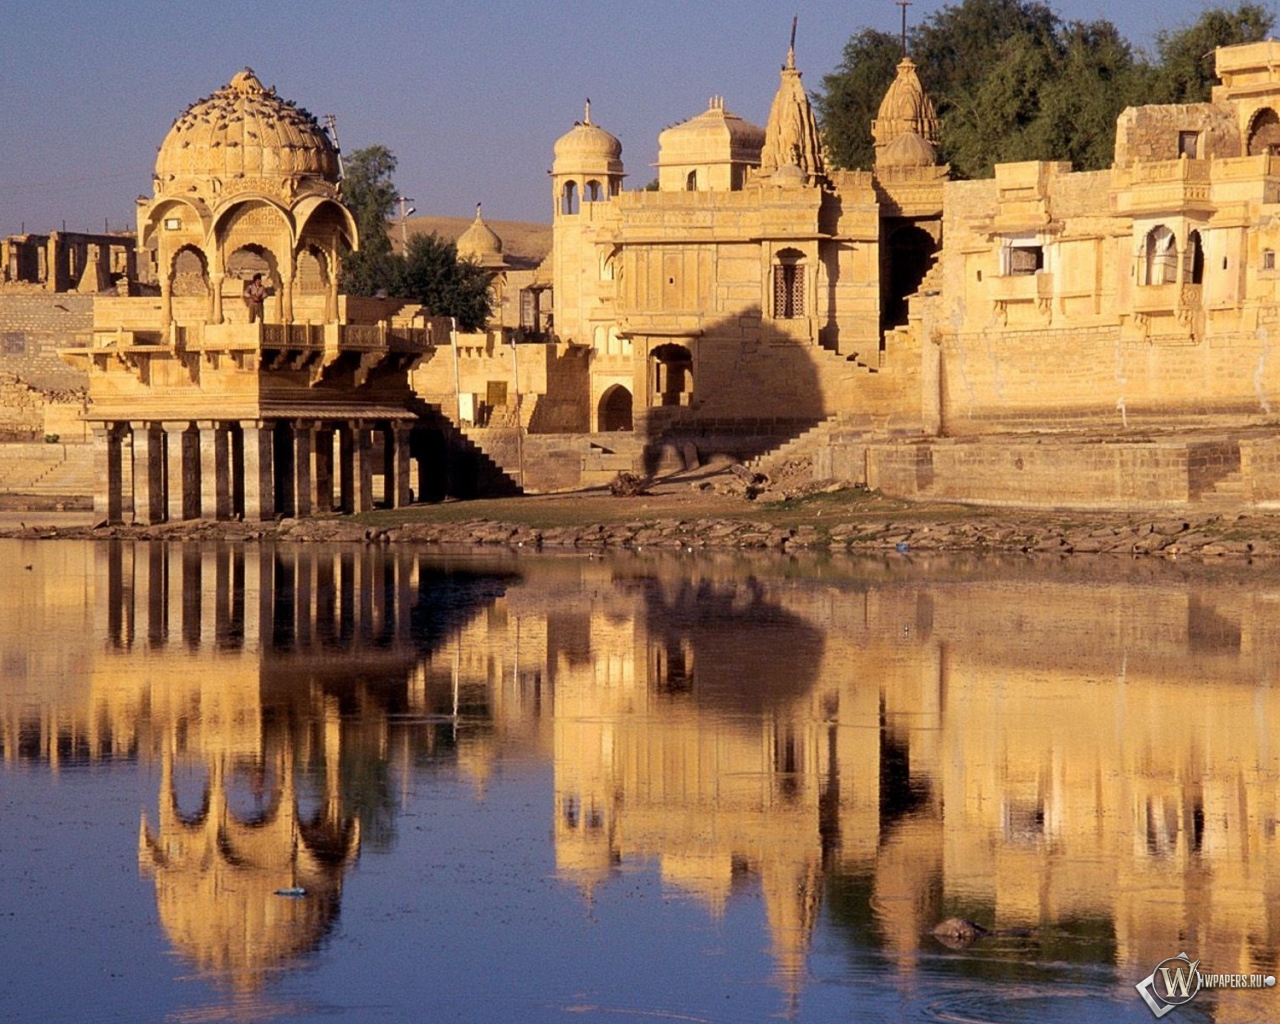 Jaisalmer - Rajasthan - India  1280x1024